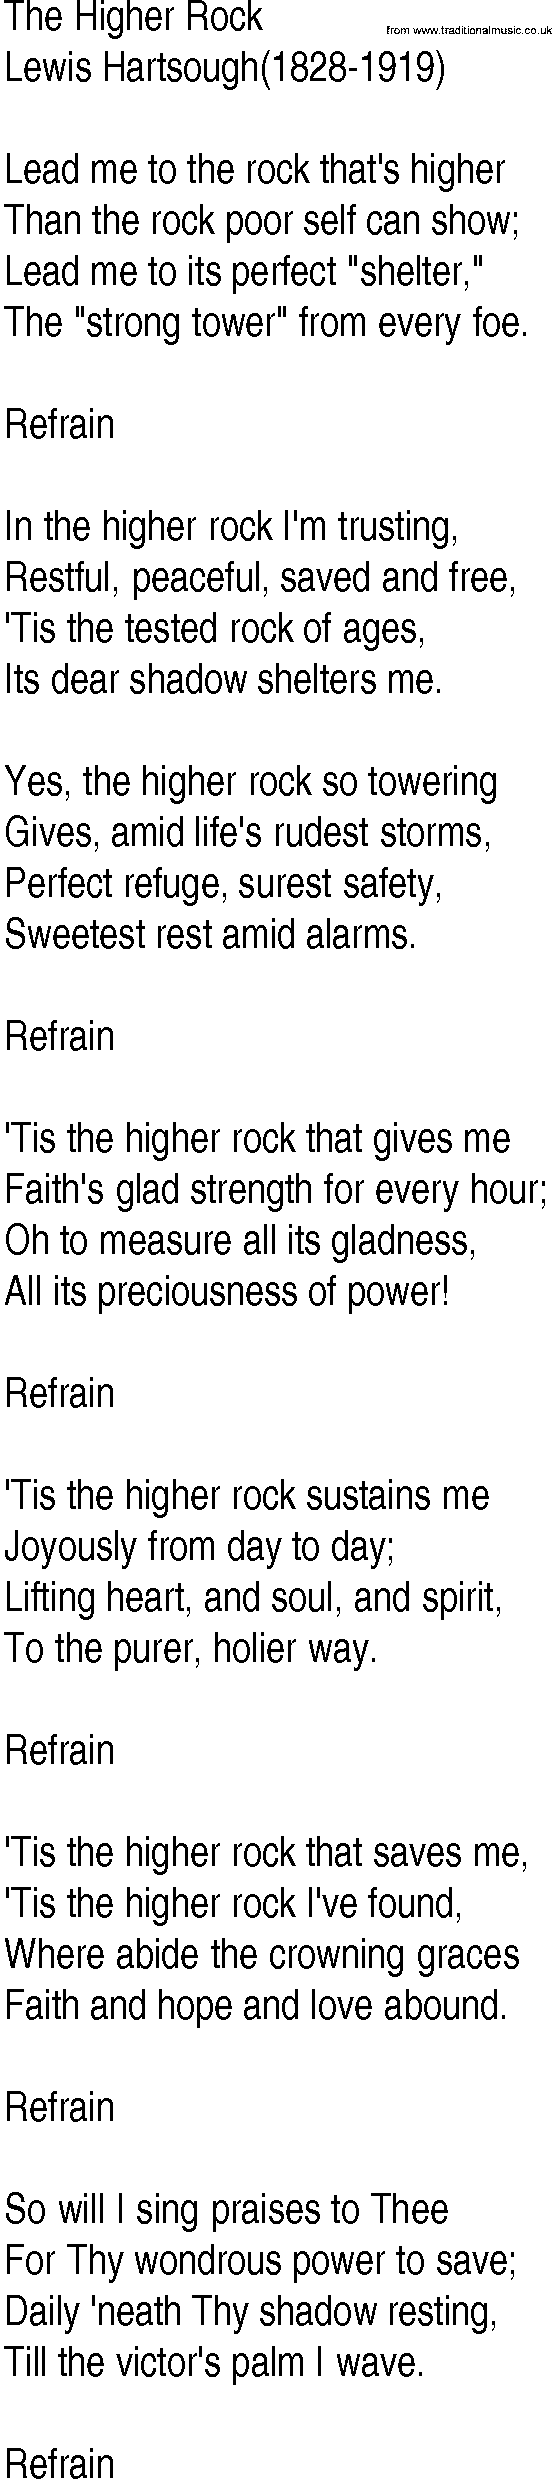 Hymn and Gospel Song: The Higher Rock by Lewis Hartsough lyrics